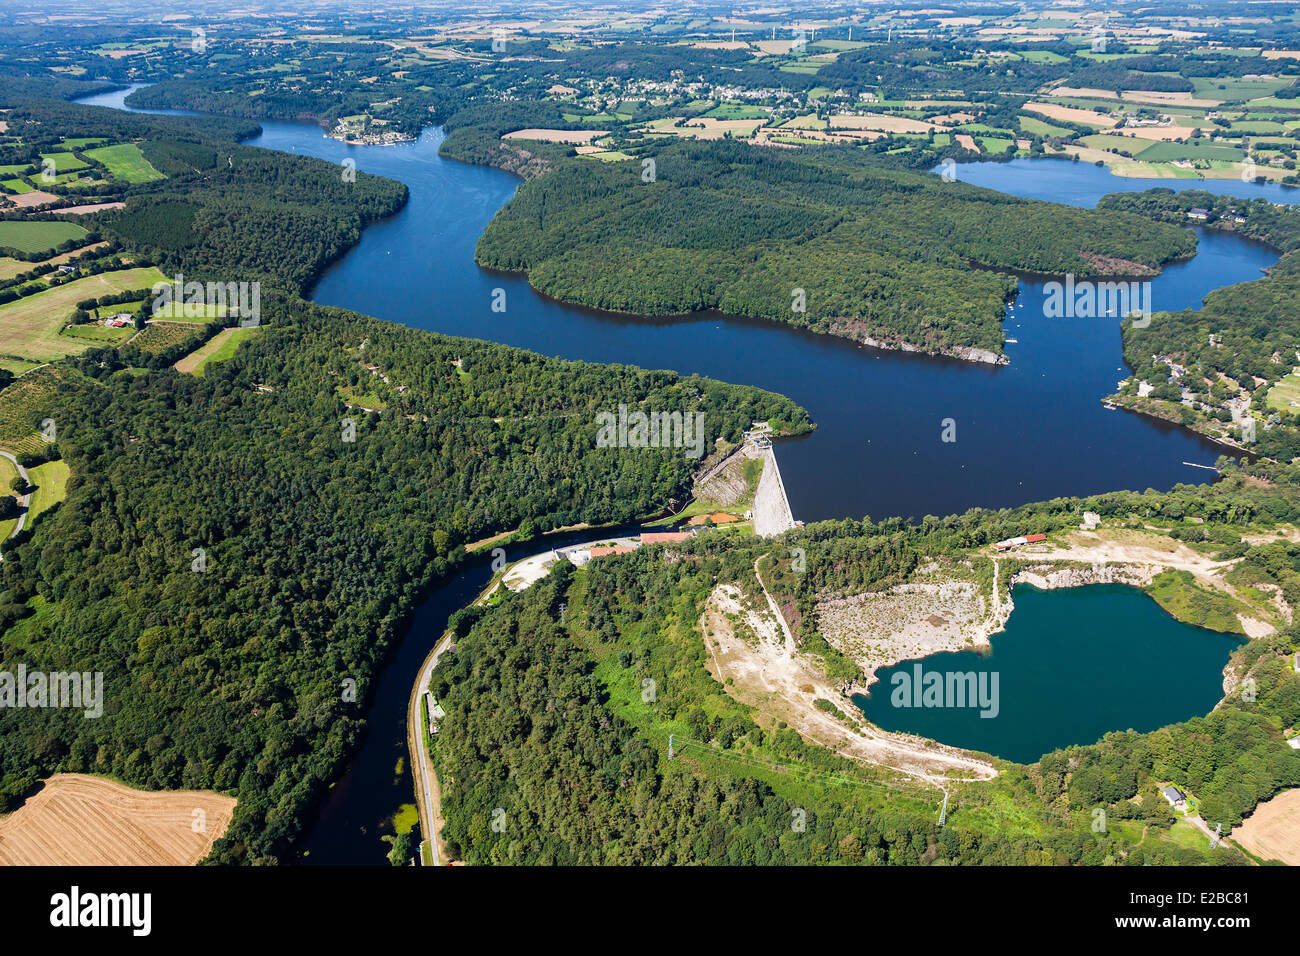 France, Cotes d'Armor, Mur de Bretagne, Guerledan dam (aerial view) Stock Photo